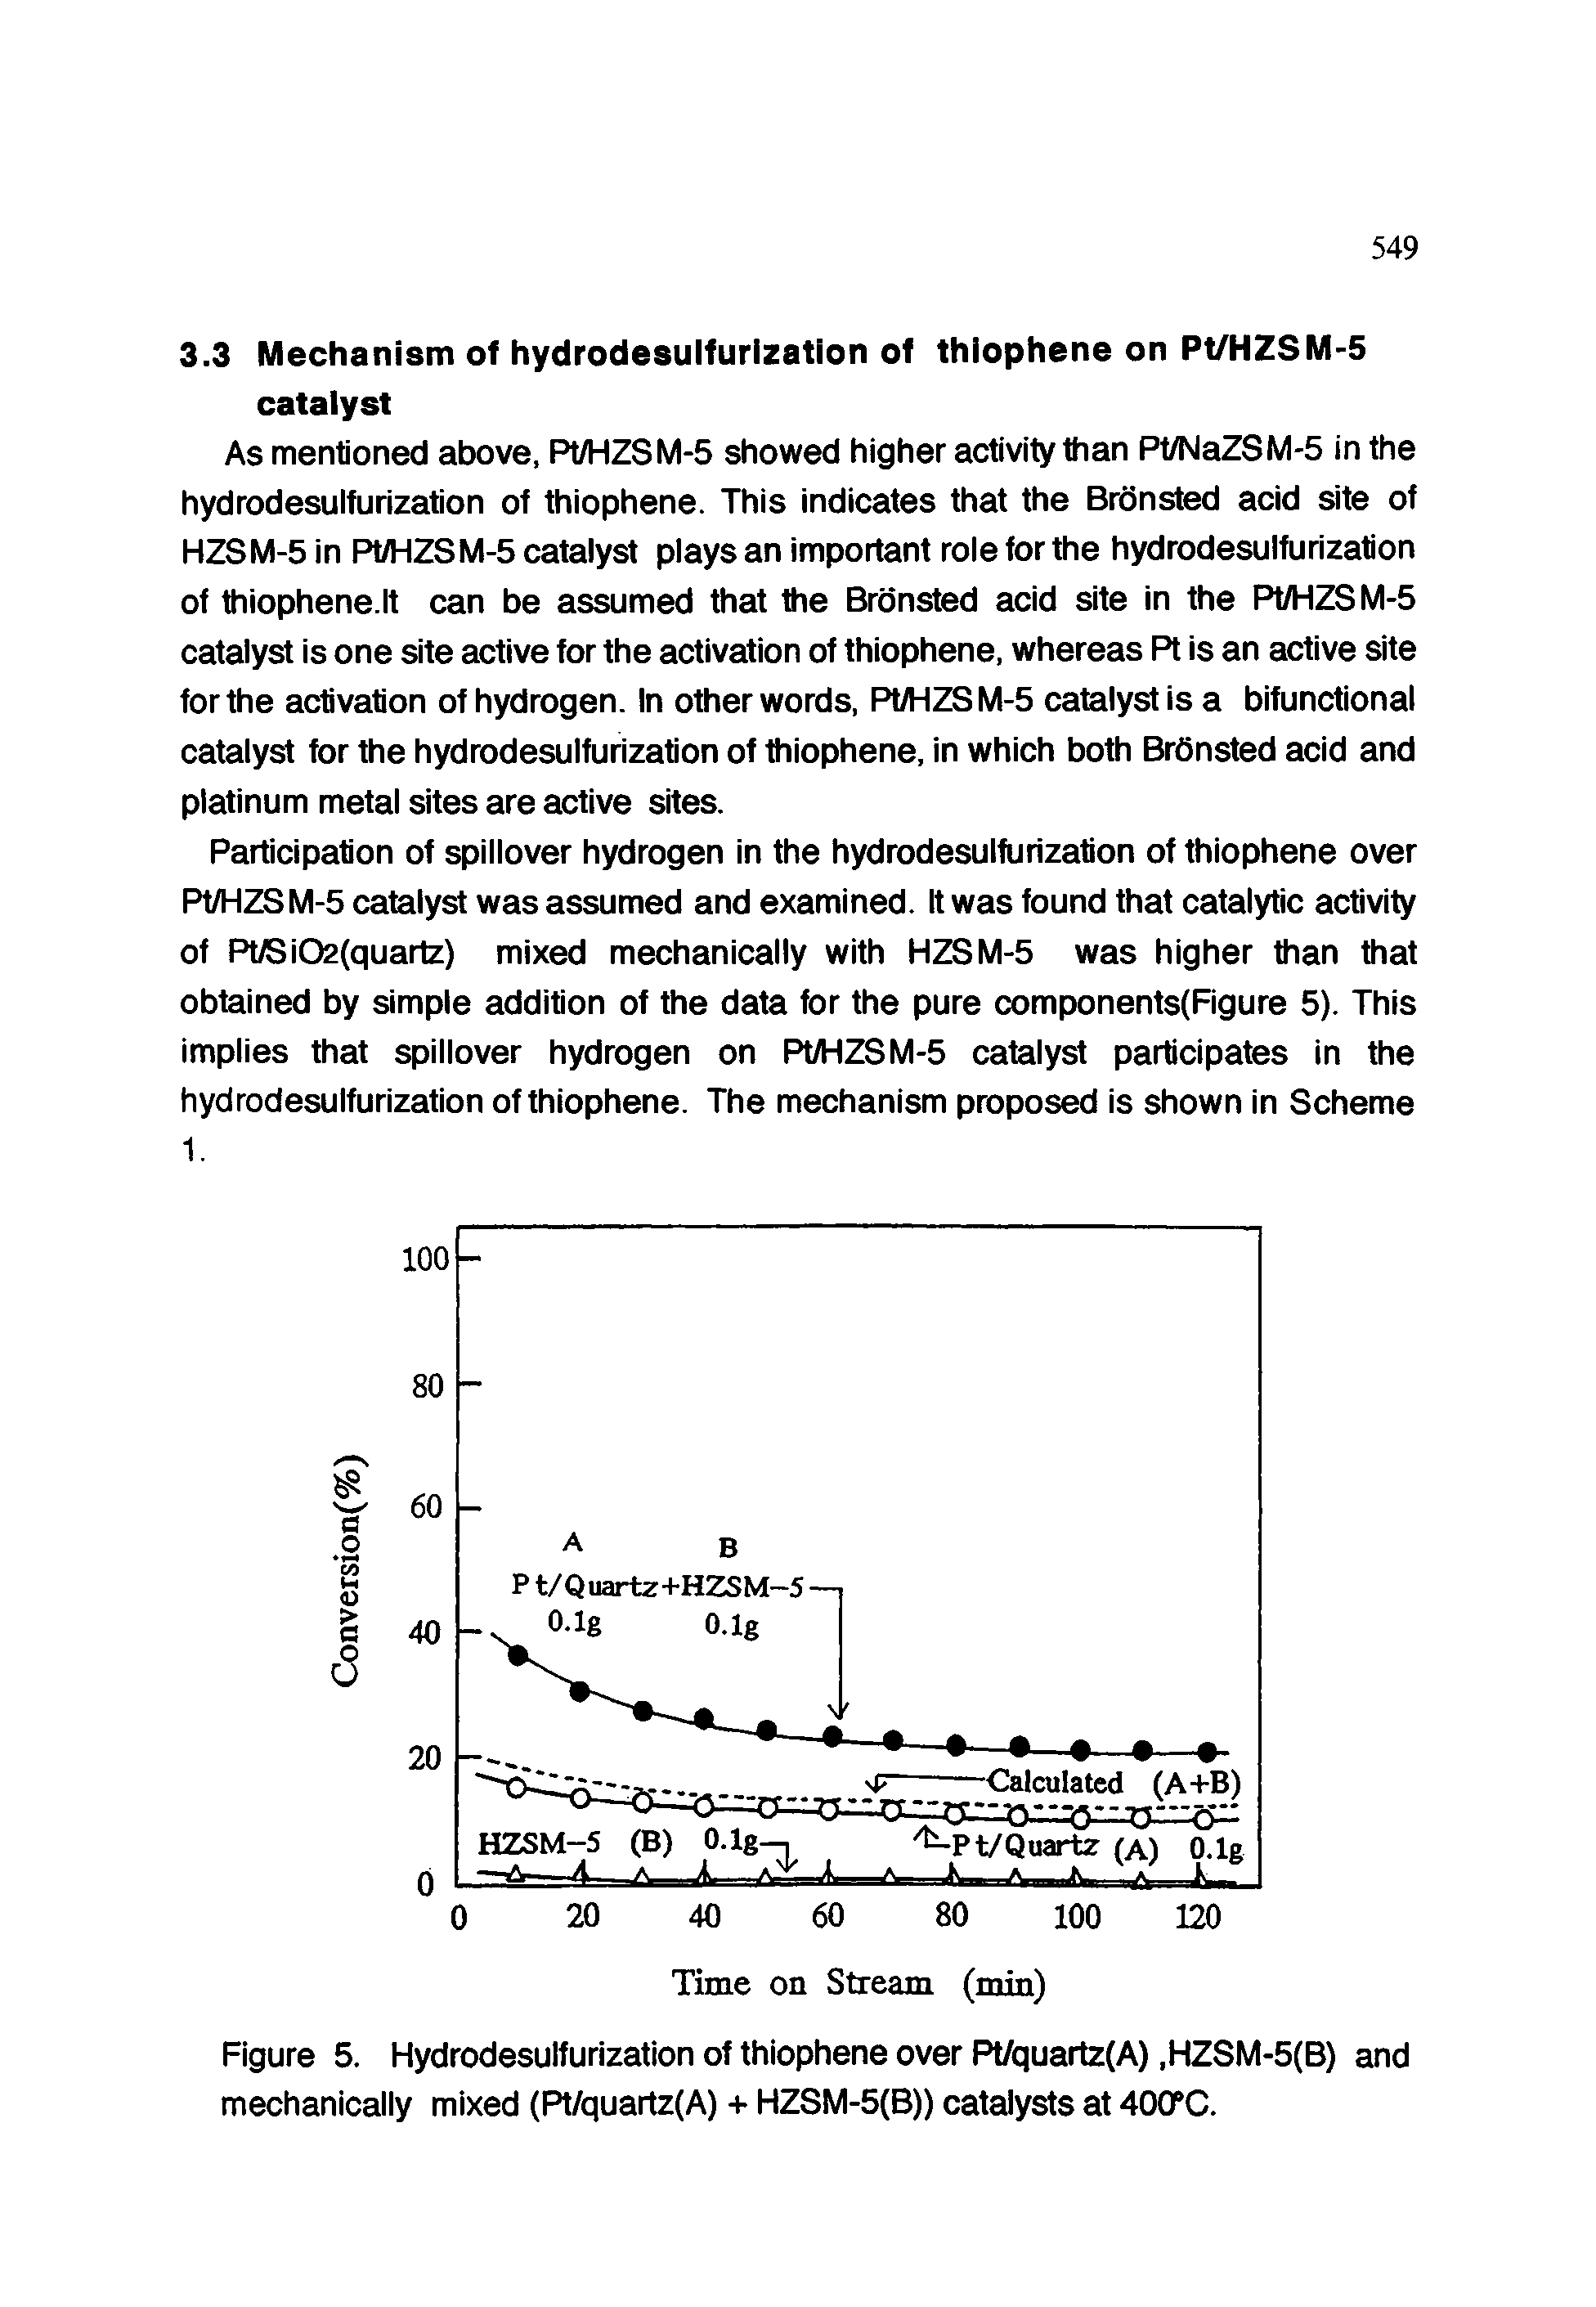 Figure 5. Hydrodesulfurization of thiophene over Pt/quartz(A), HZSM-5(B) and mechanically mixed (R/quartz(A) + HZSM-5(B)) catalysts at 40(TC.